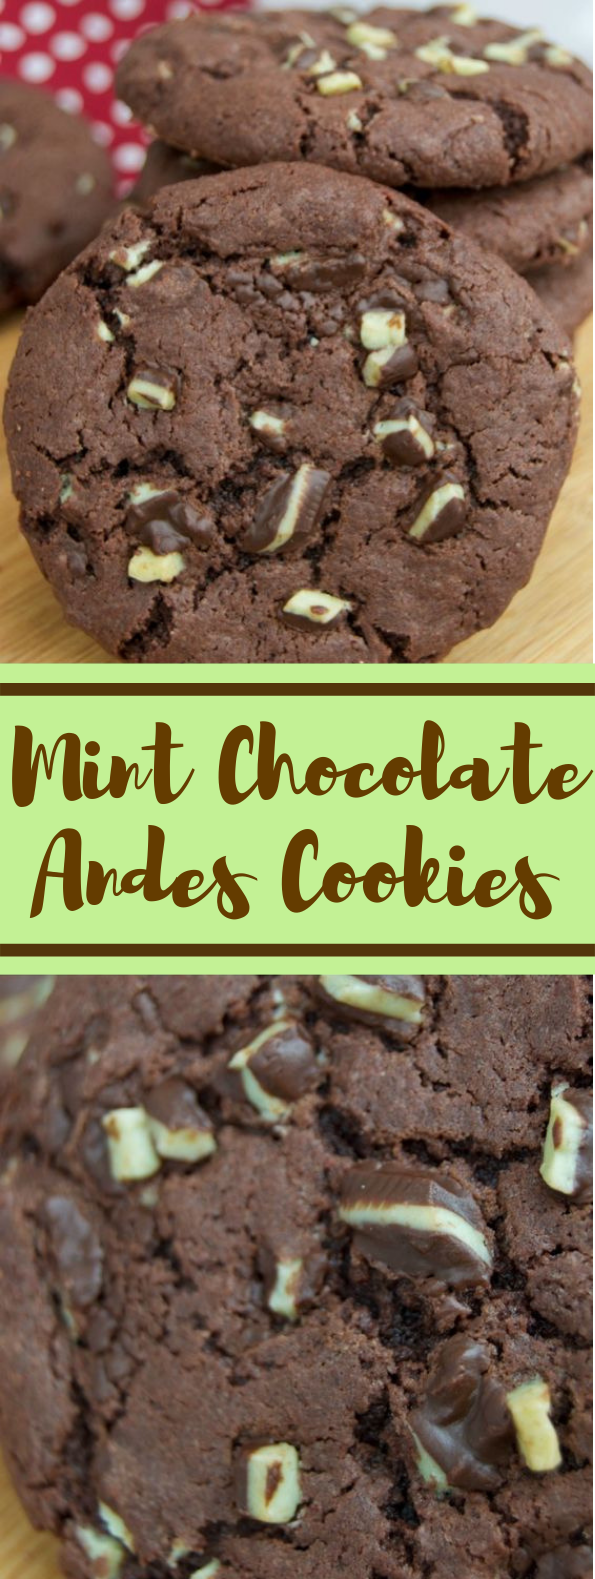 Mint Chocolate Andes Cookies #Cookies #Chocolate